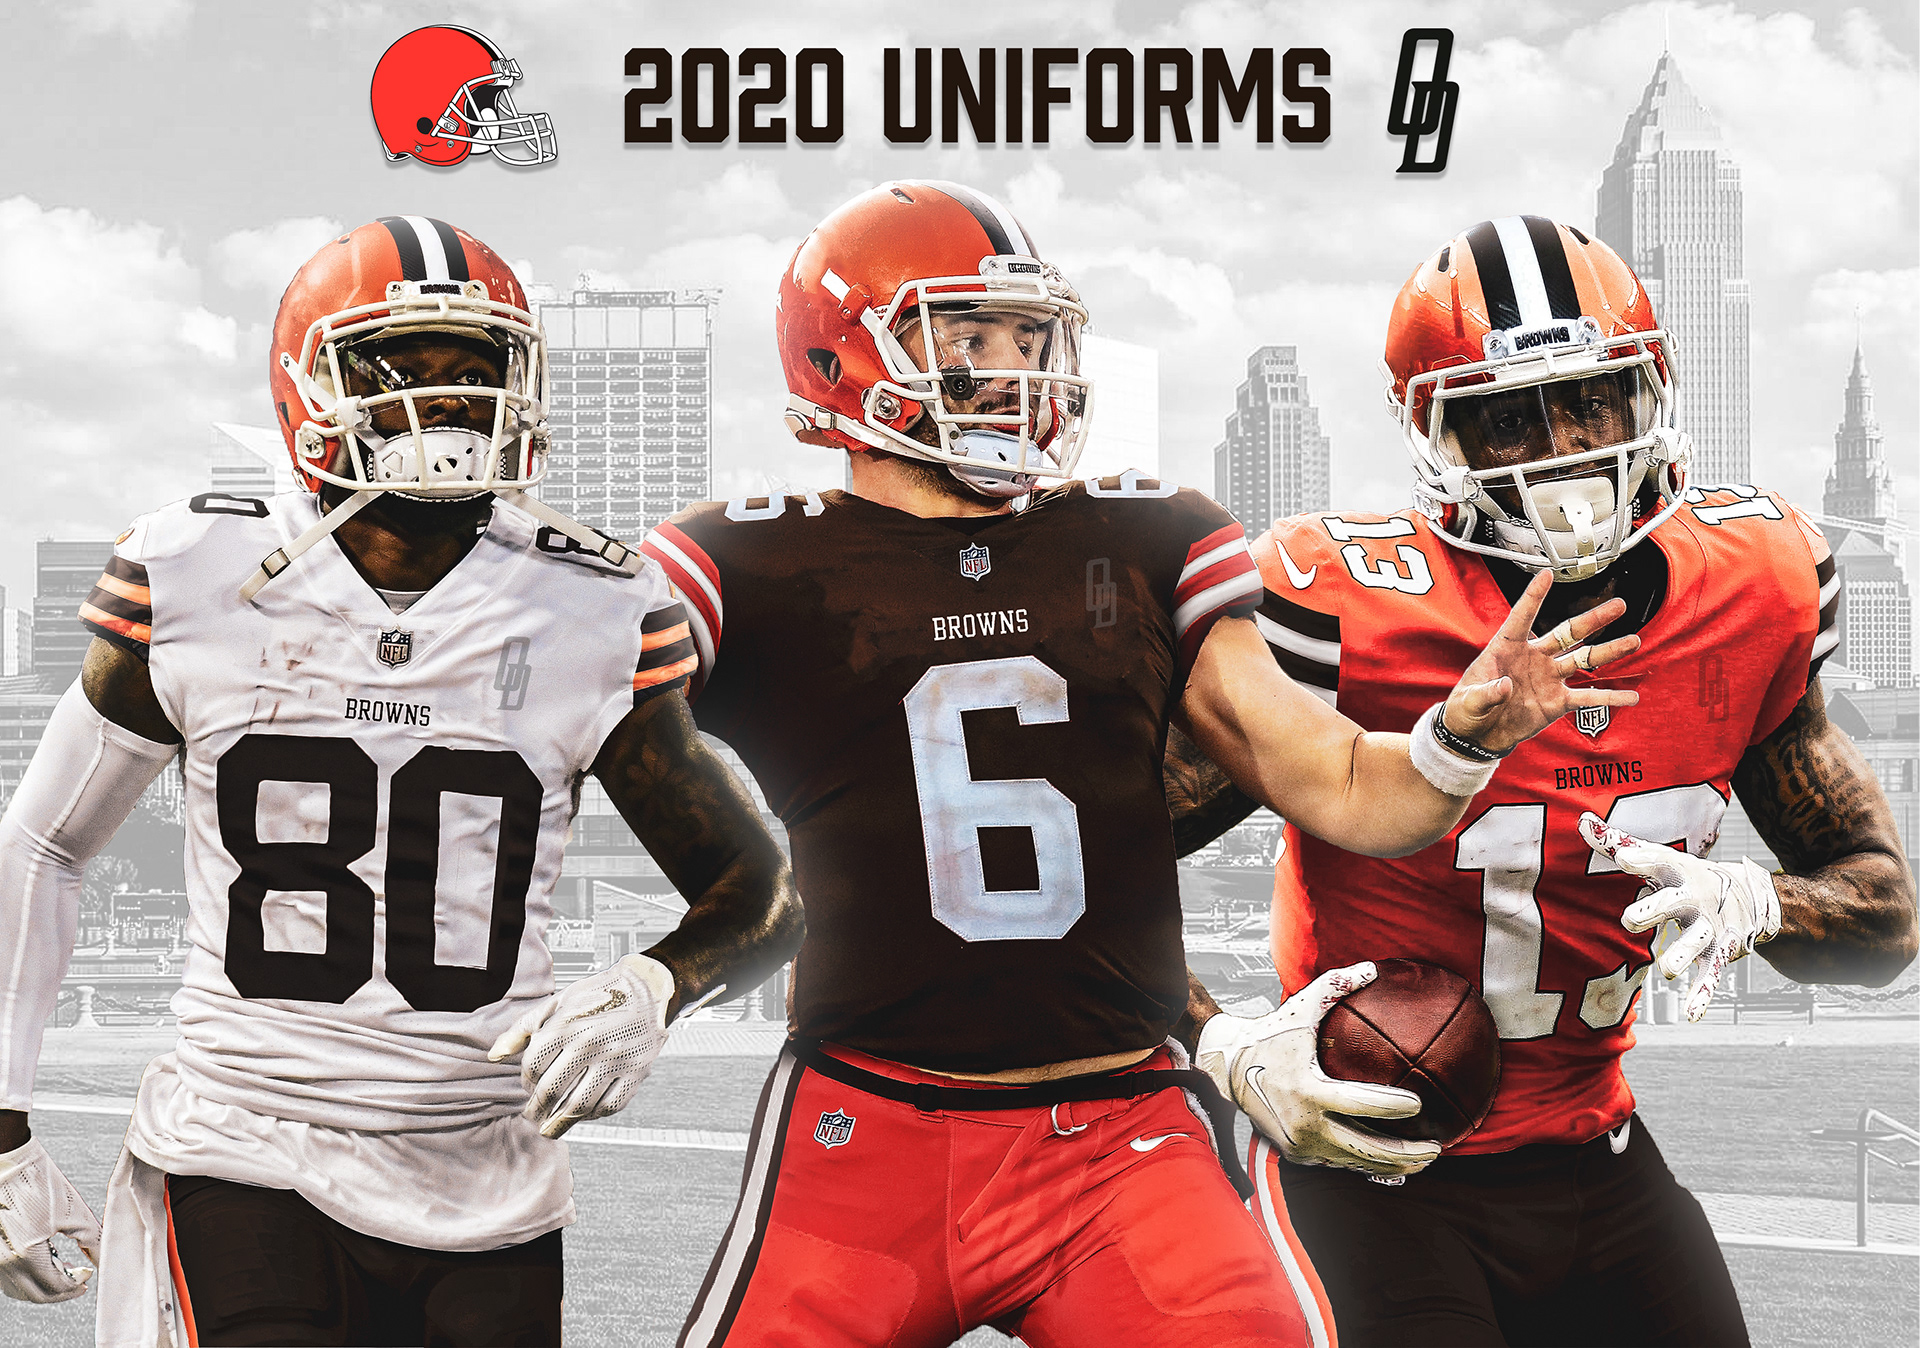 cleveland browns uniforms 2020